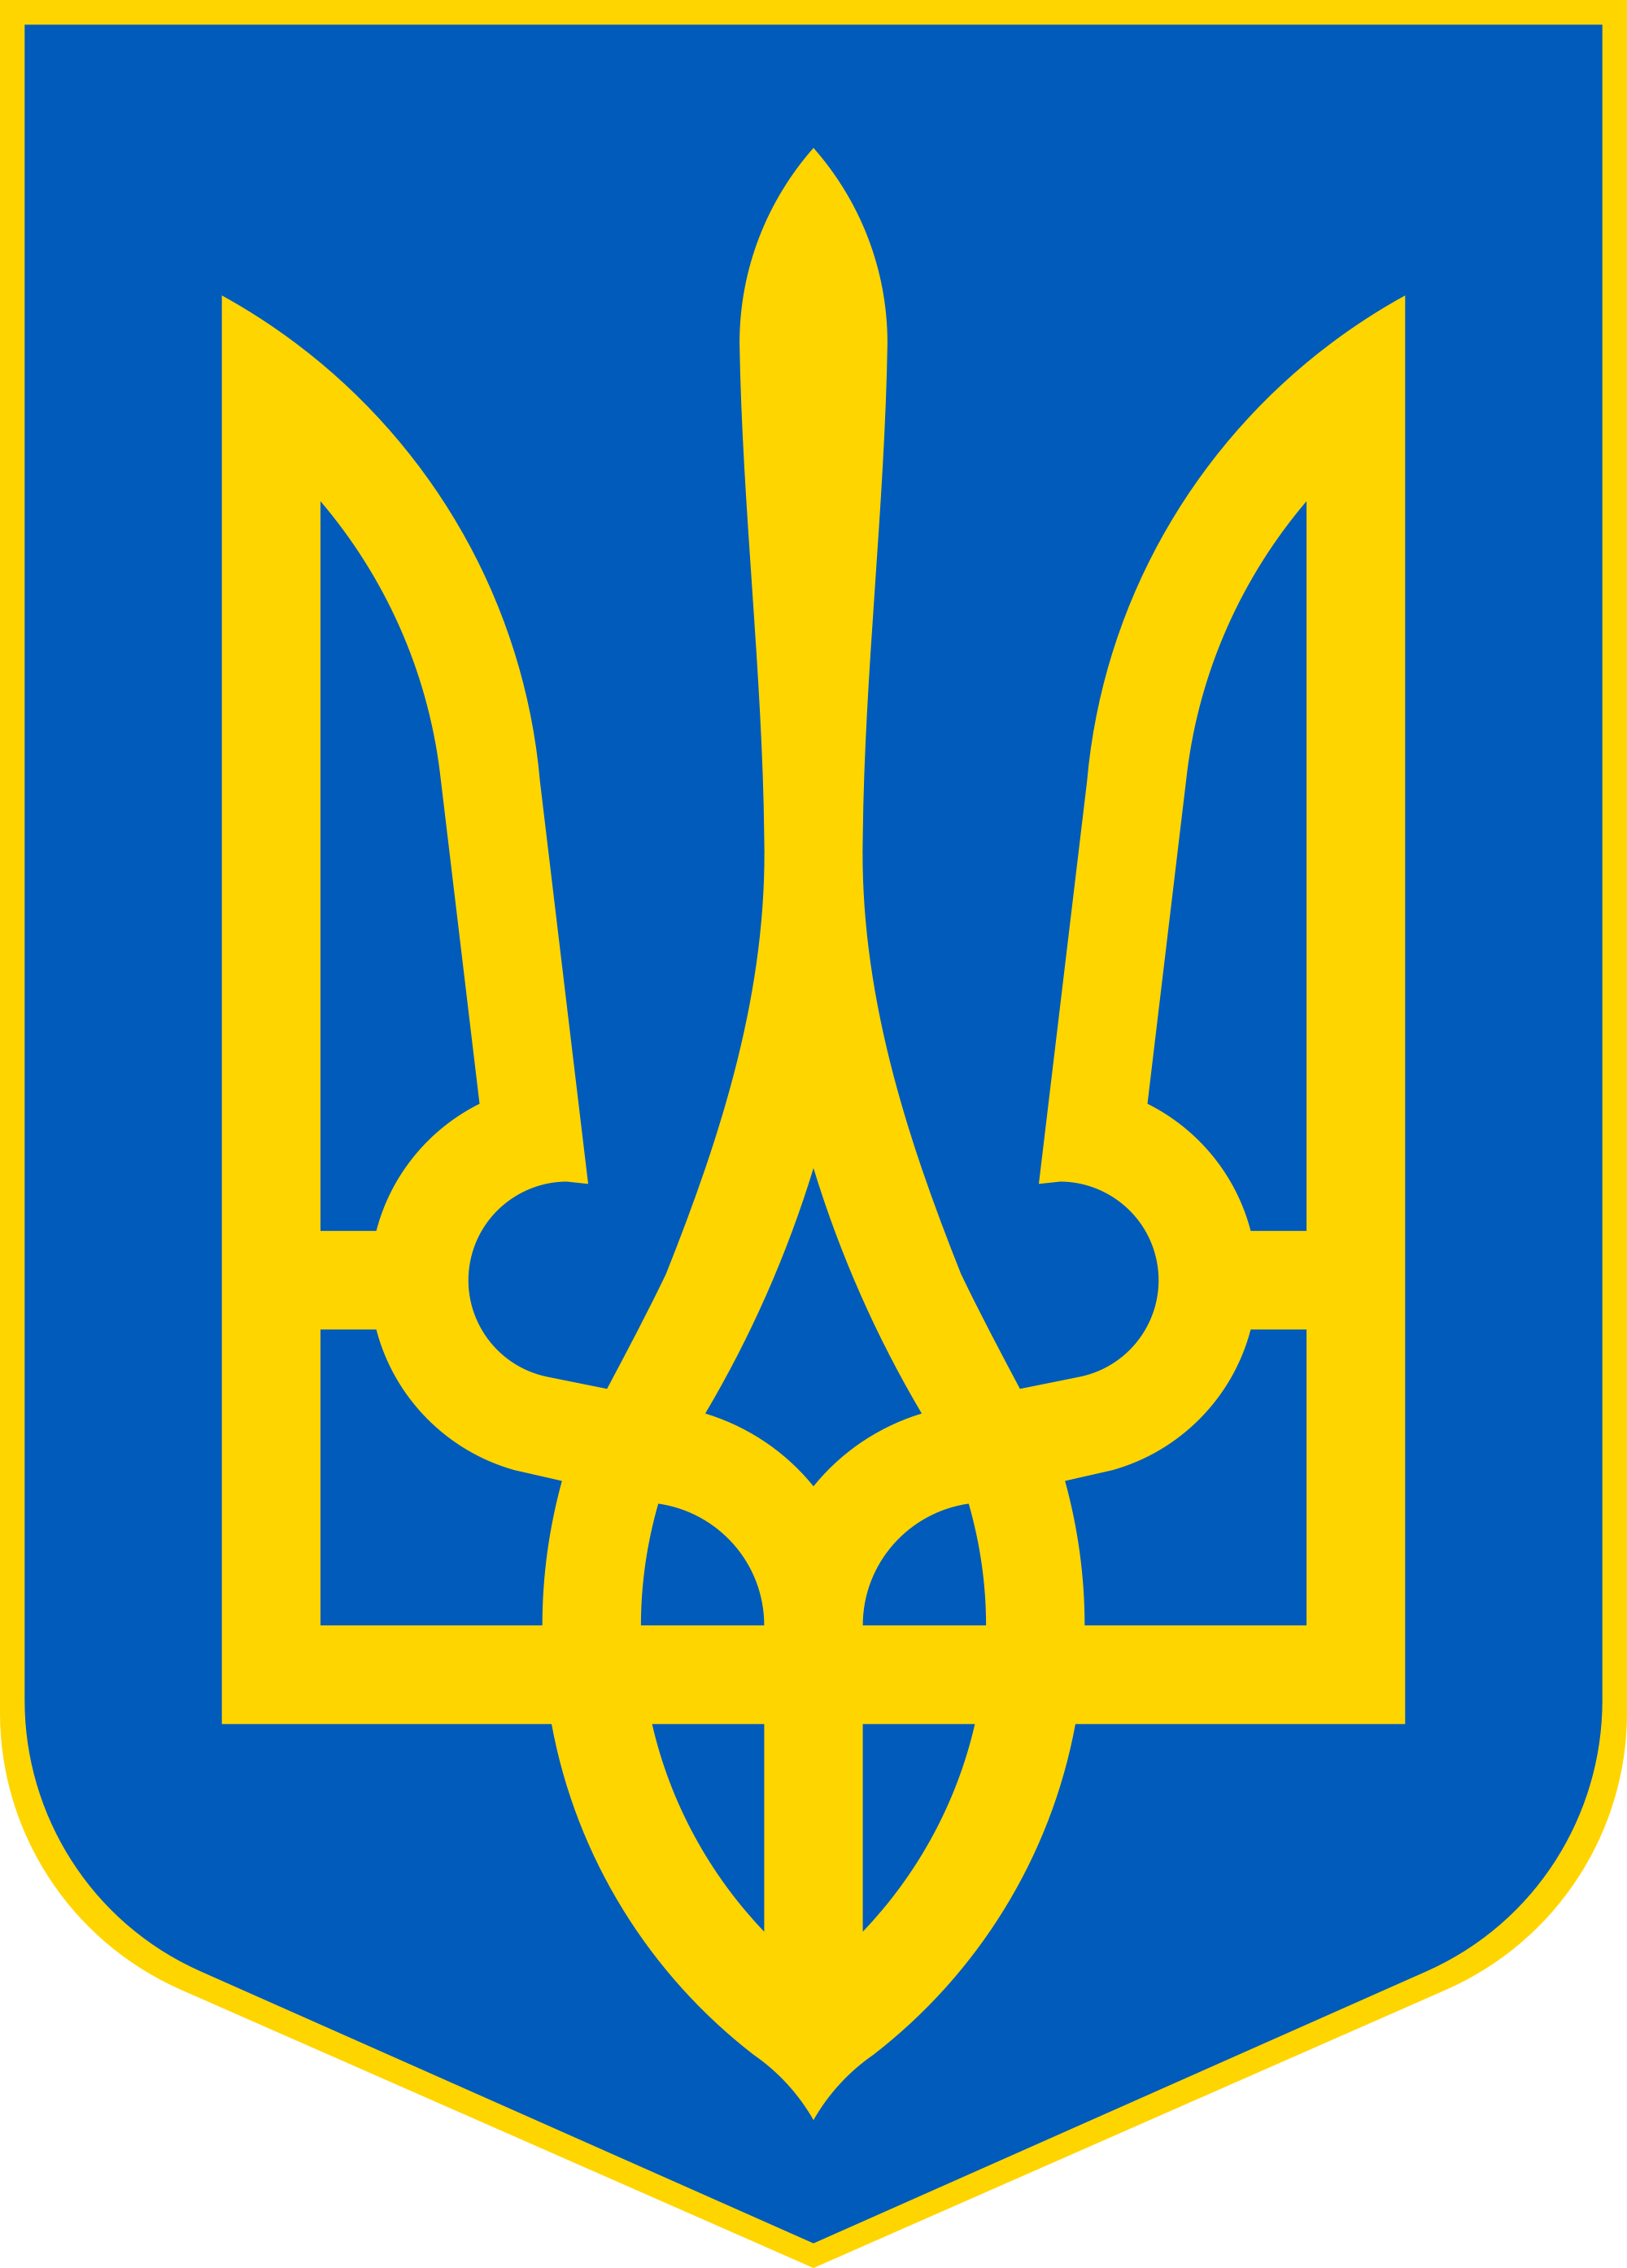 Coat Of Arms Of Ukraine.png - Ukraine, Transparent background PNG HD thumbnail